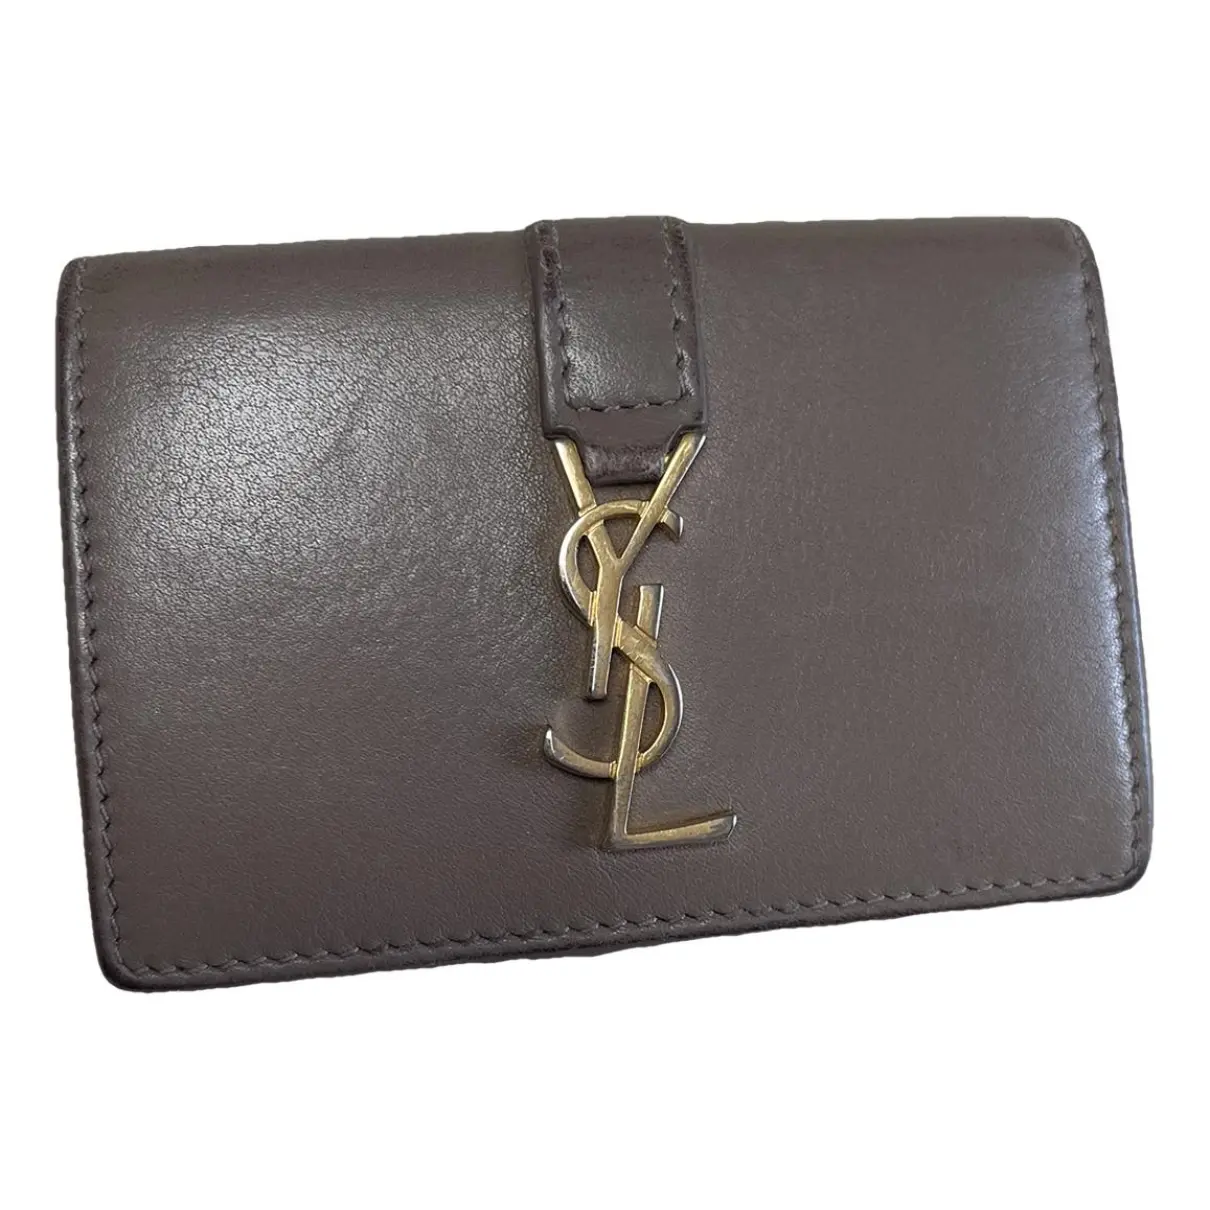 Ysl line leather wallet